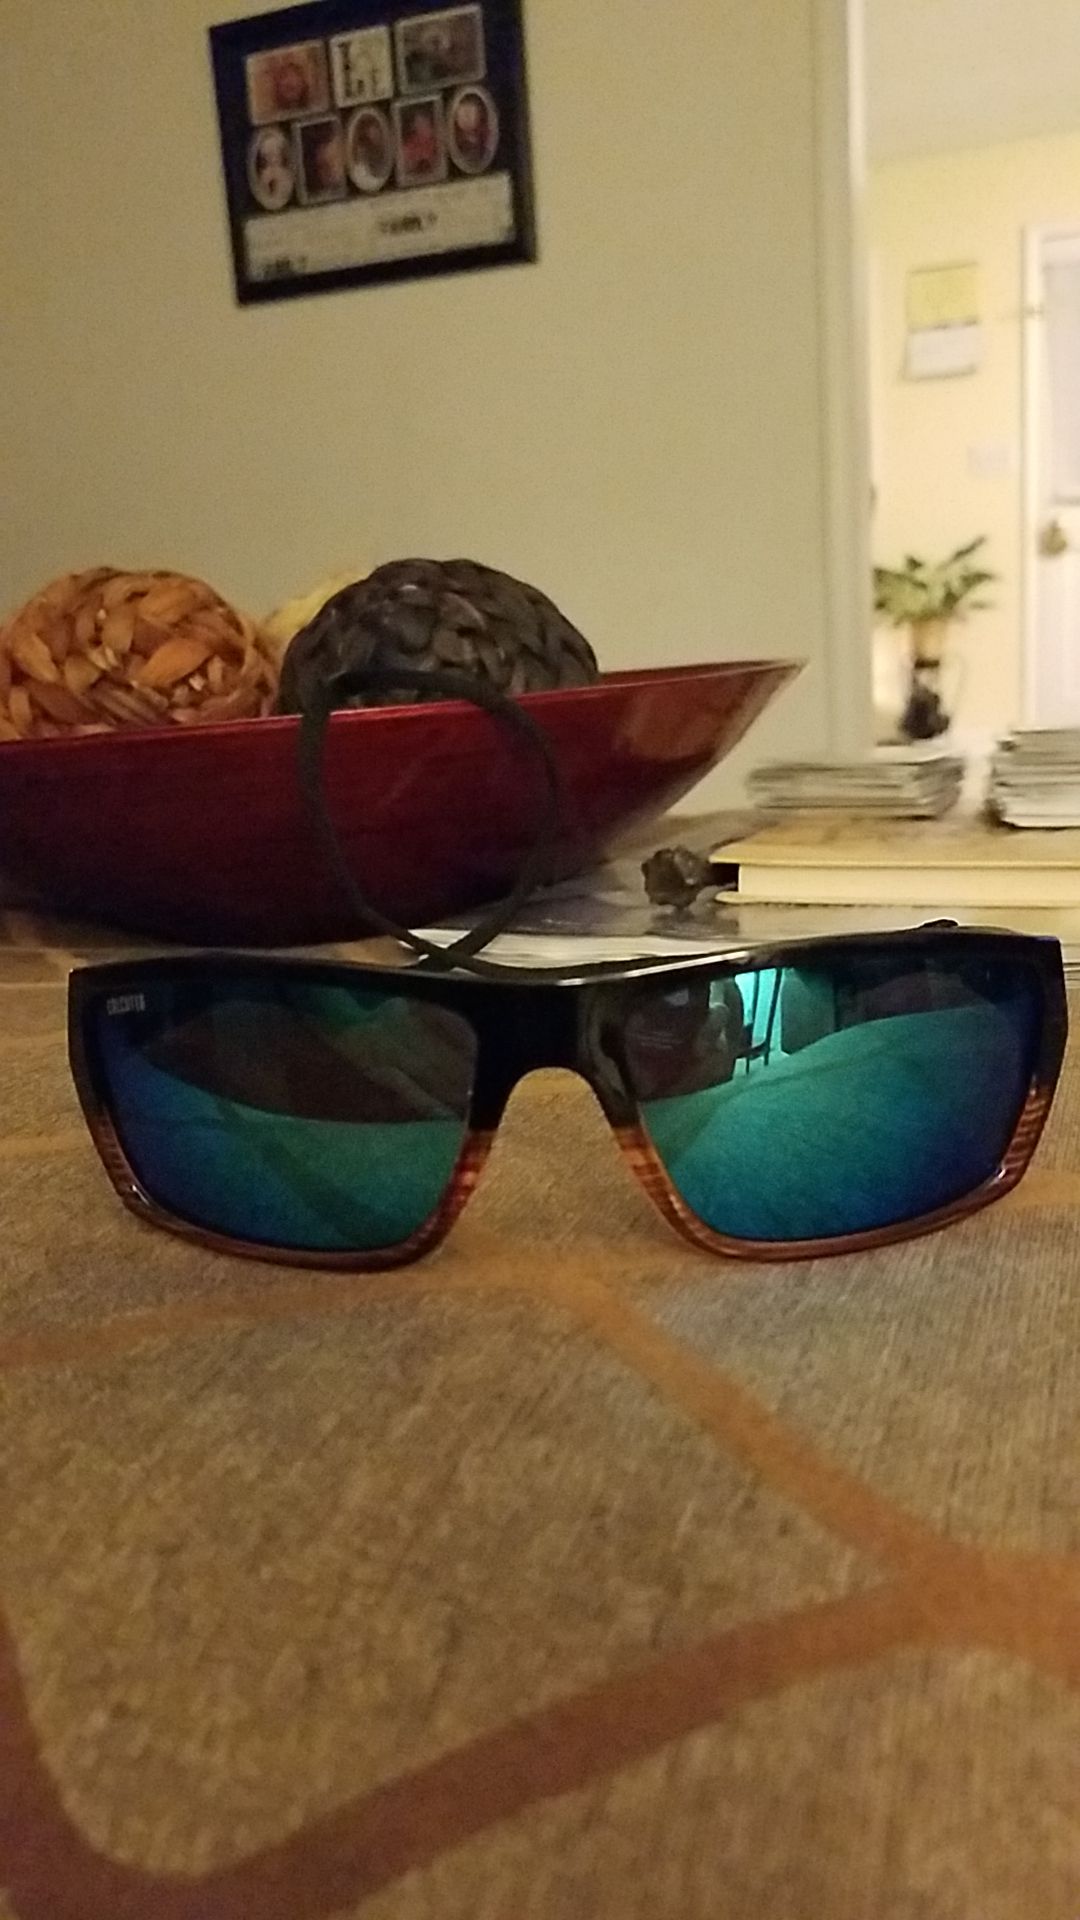 Calcutta polarized sunglasses for Sale in Stokesdale, NC - OfferUp